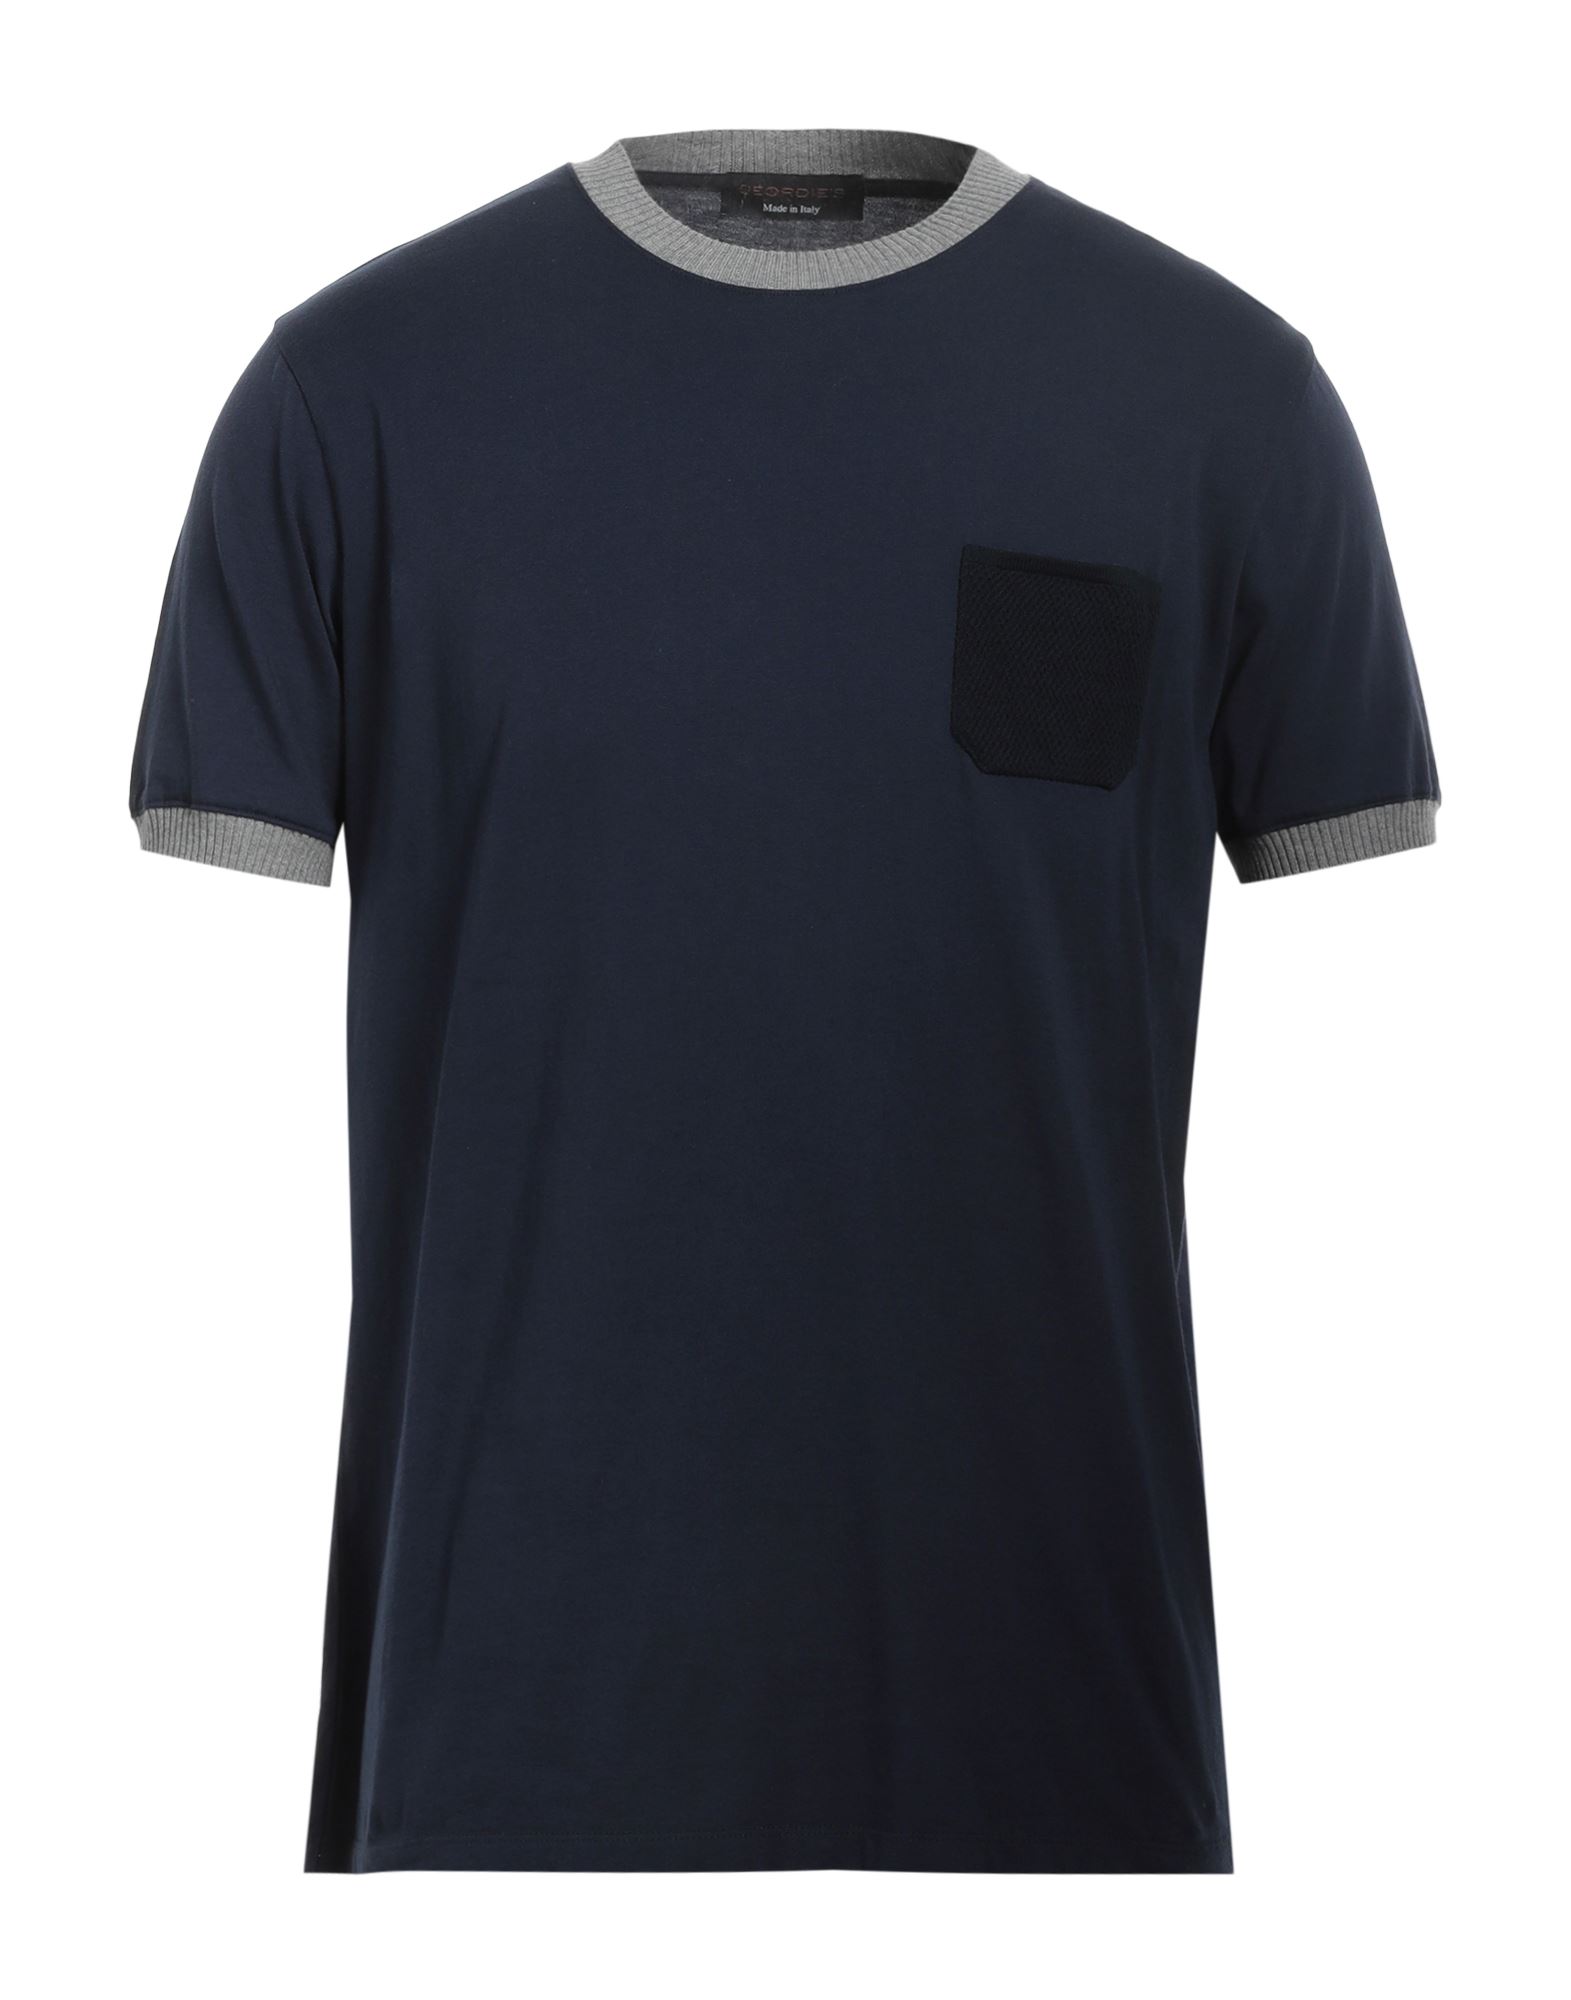 Jeordie's Man T-shirt Midnight Blue Size M Cotton